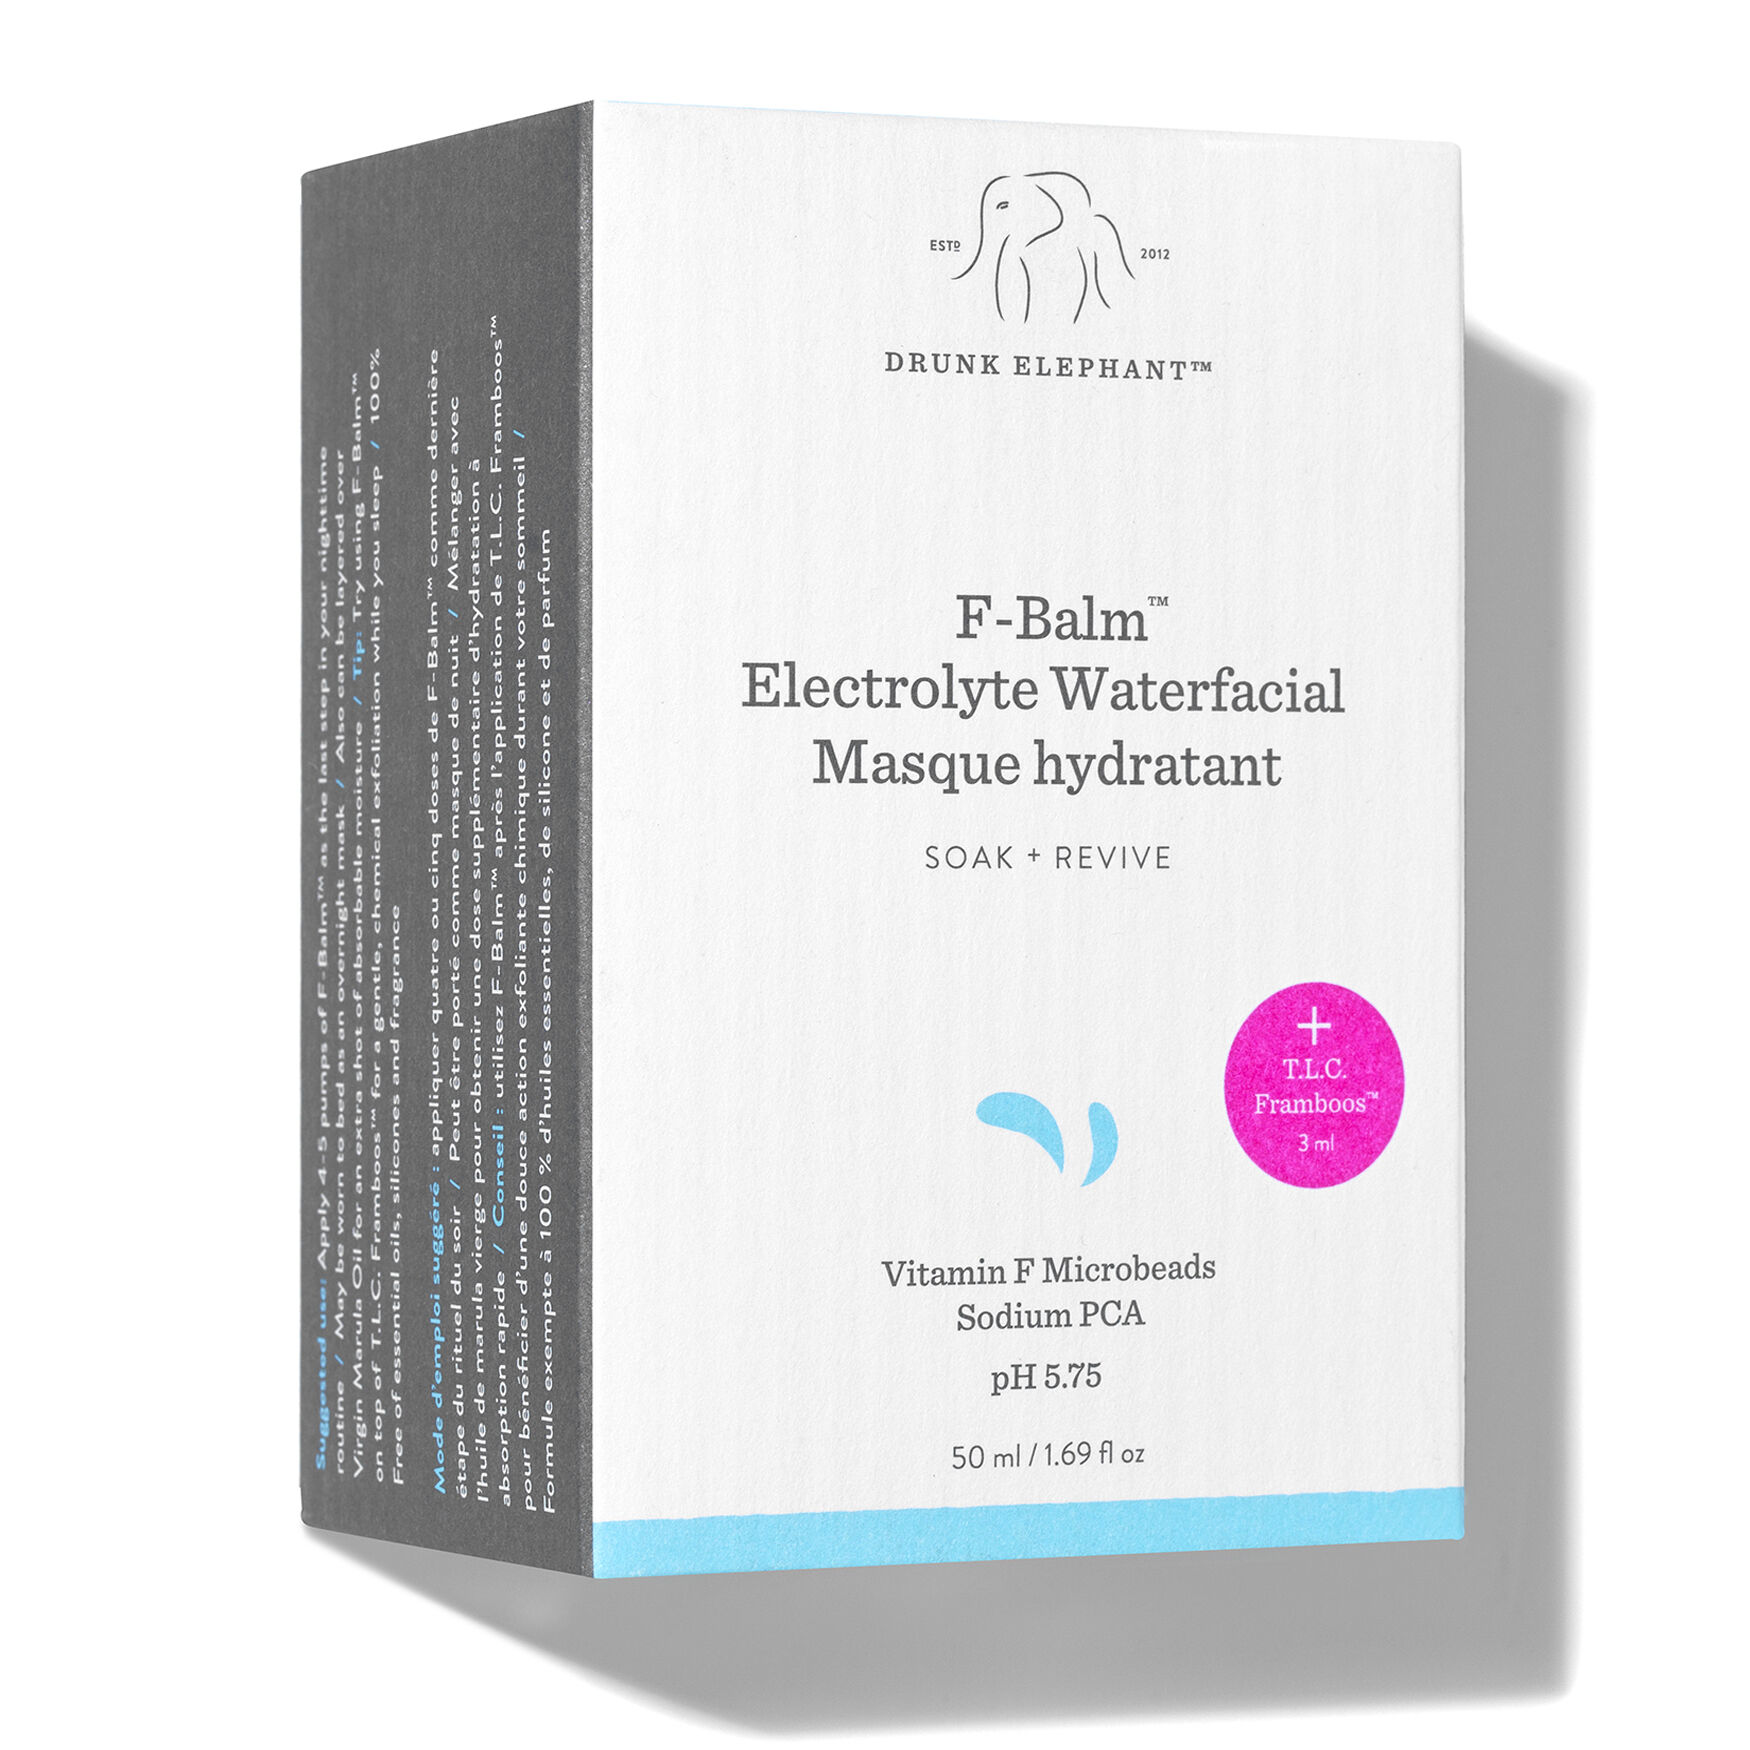 DRUNK ELEPHANT F-Balm Electrolyte Waterfacial Hydrating Mask Packaging Verpackung Karton Box